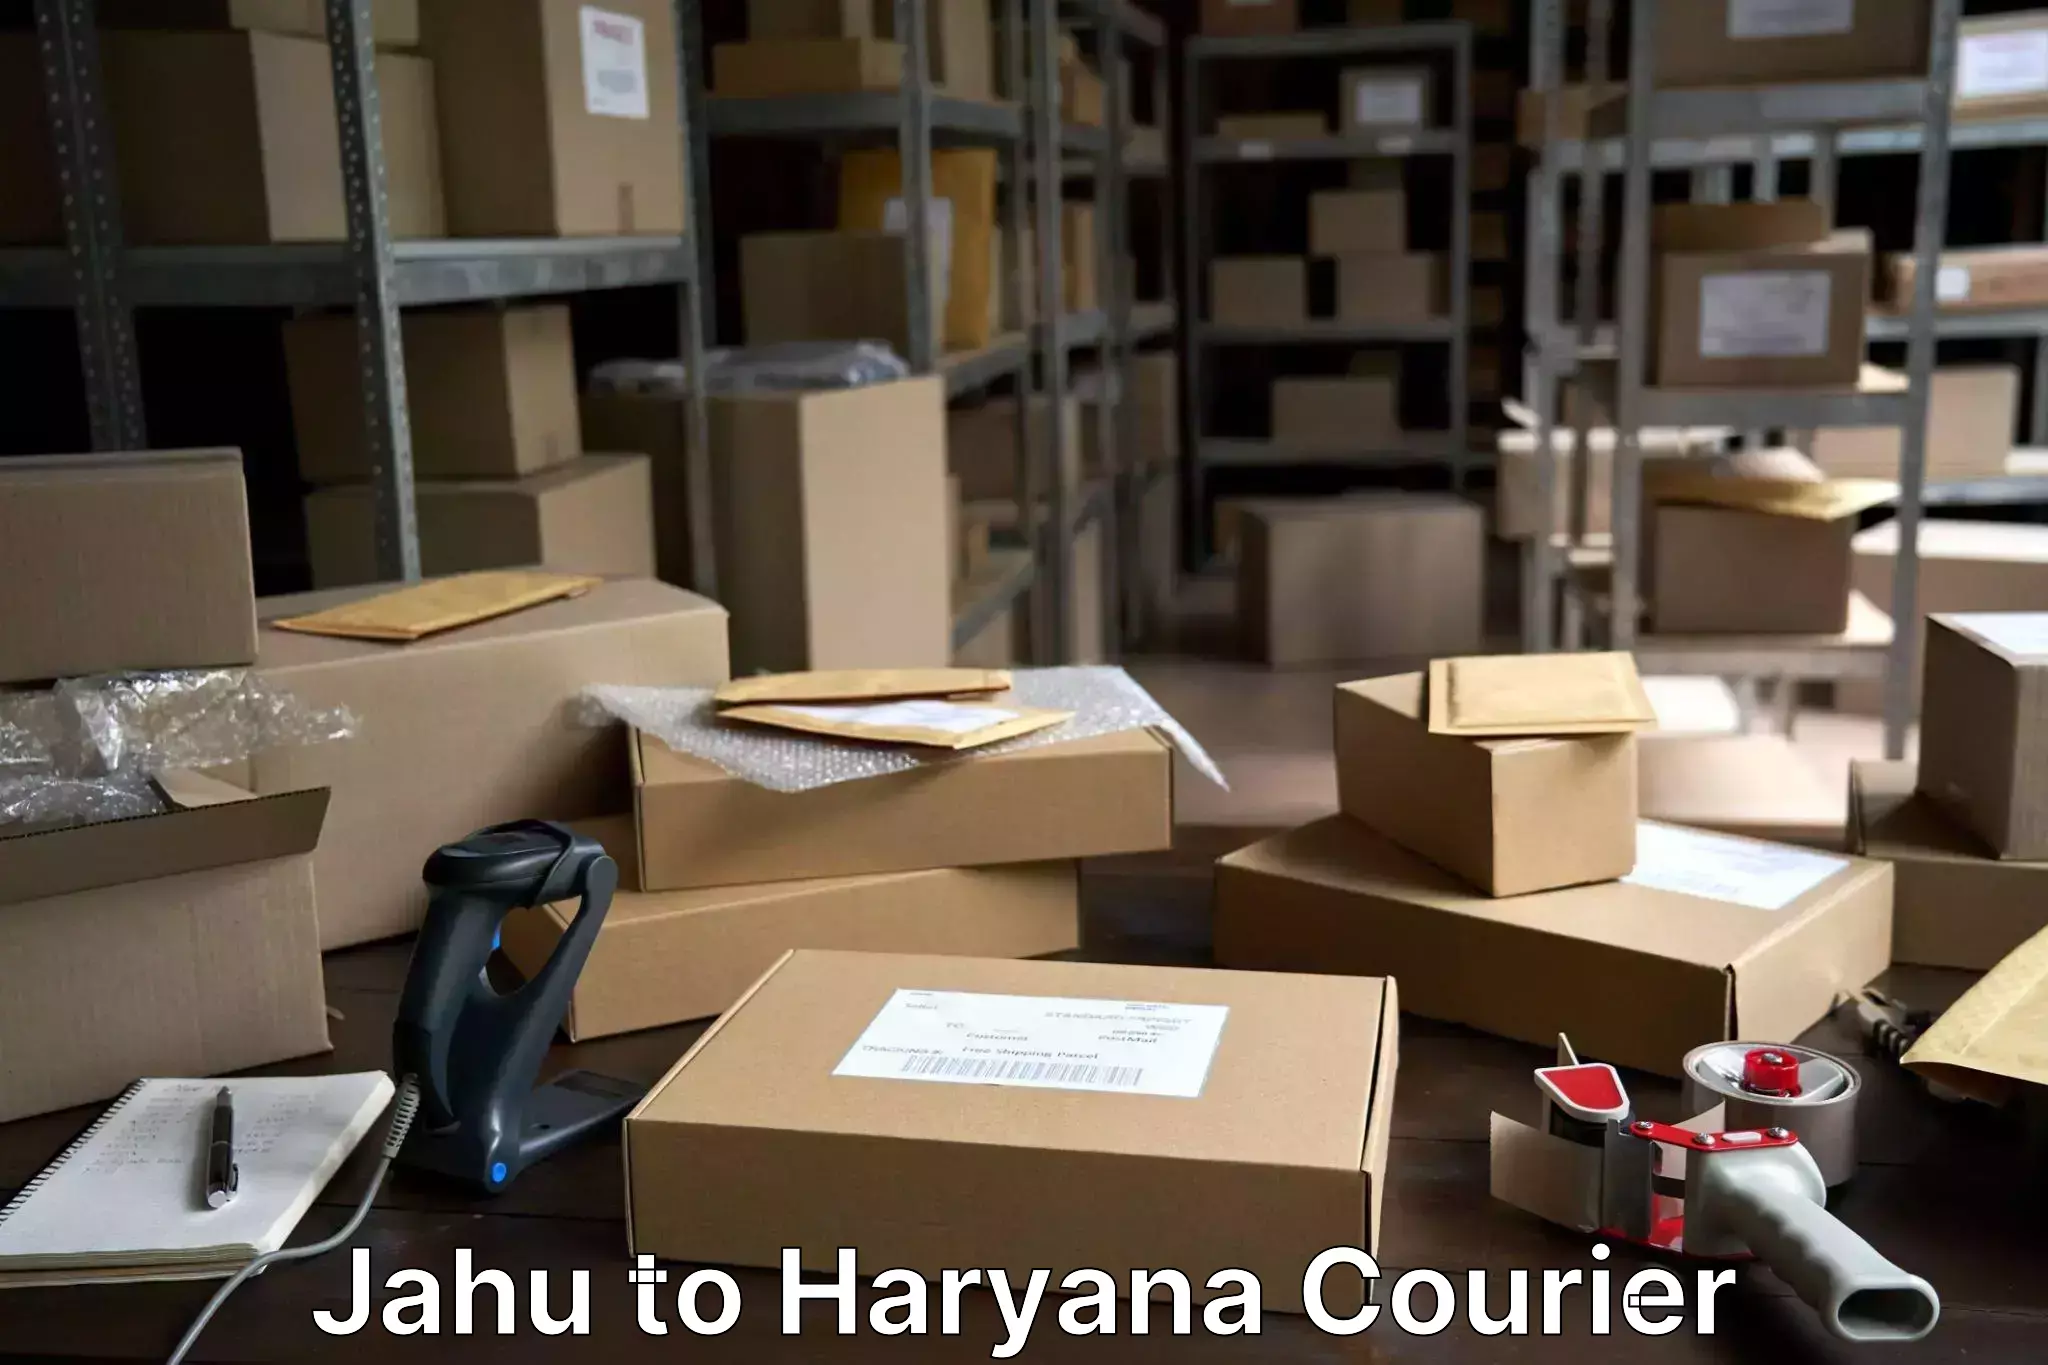 Baggage shipping service Jahu to Haryana